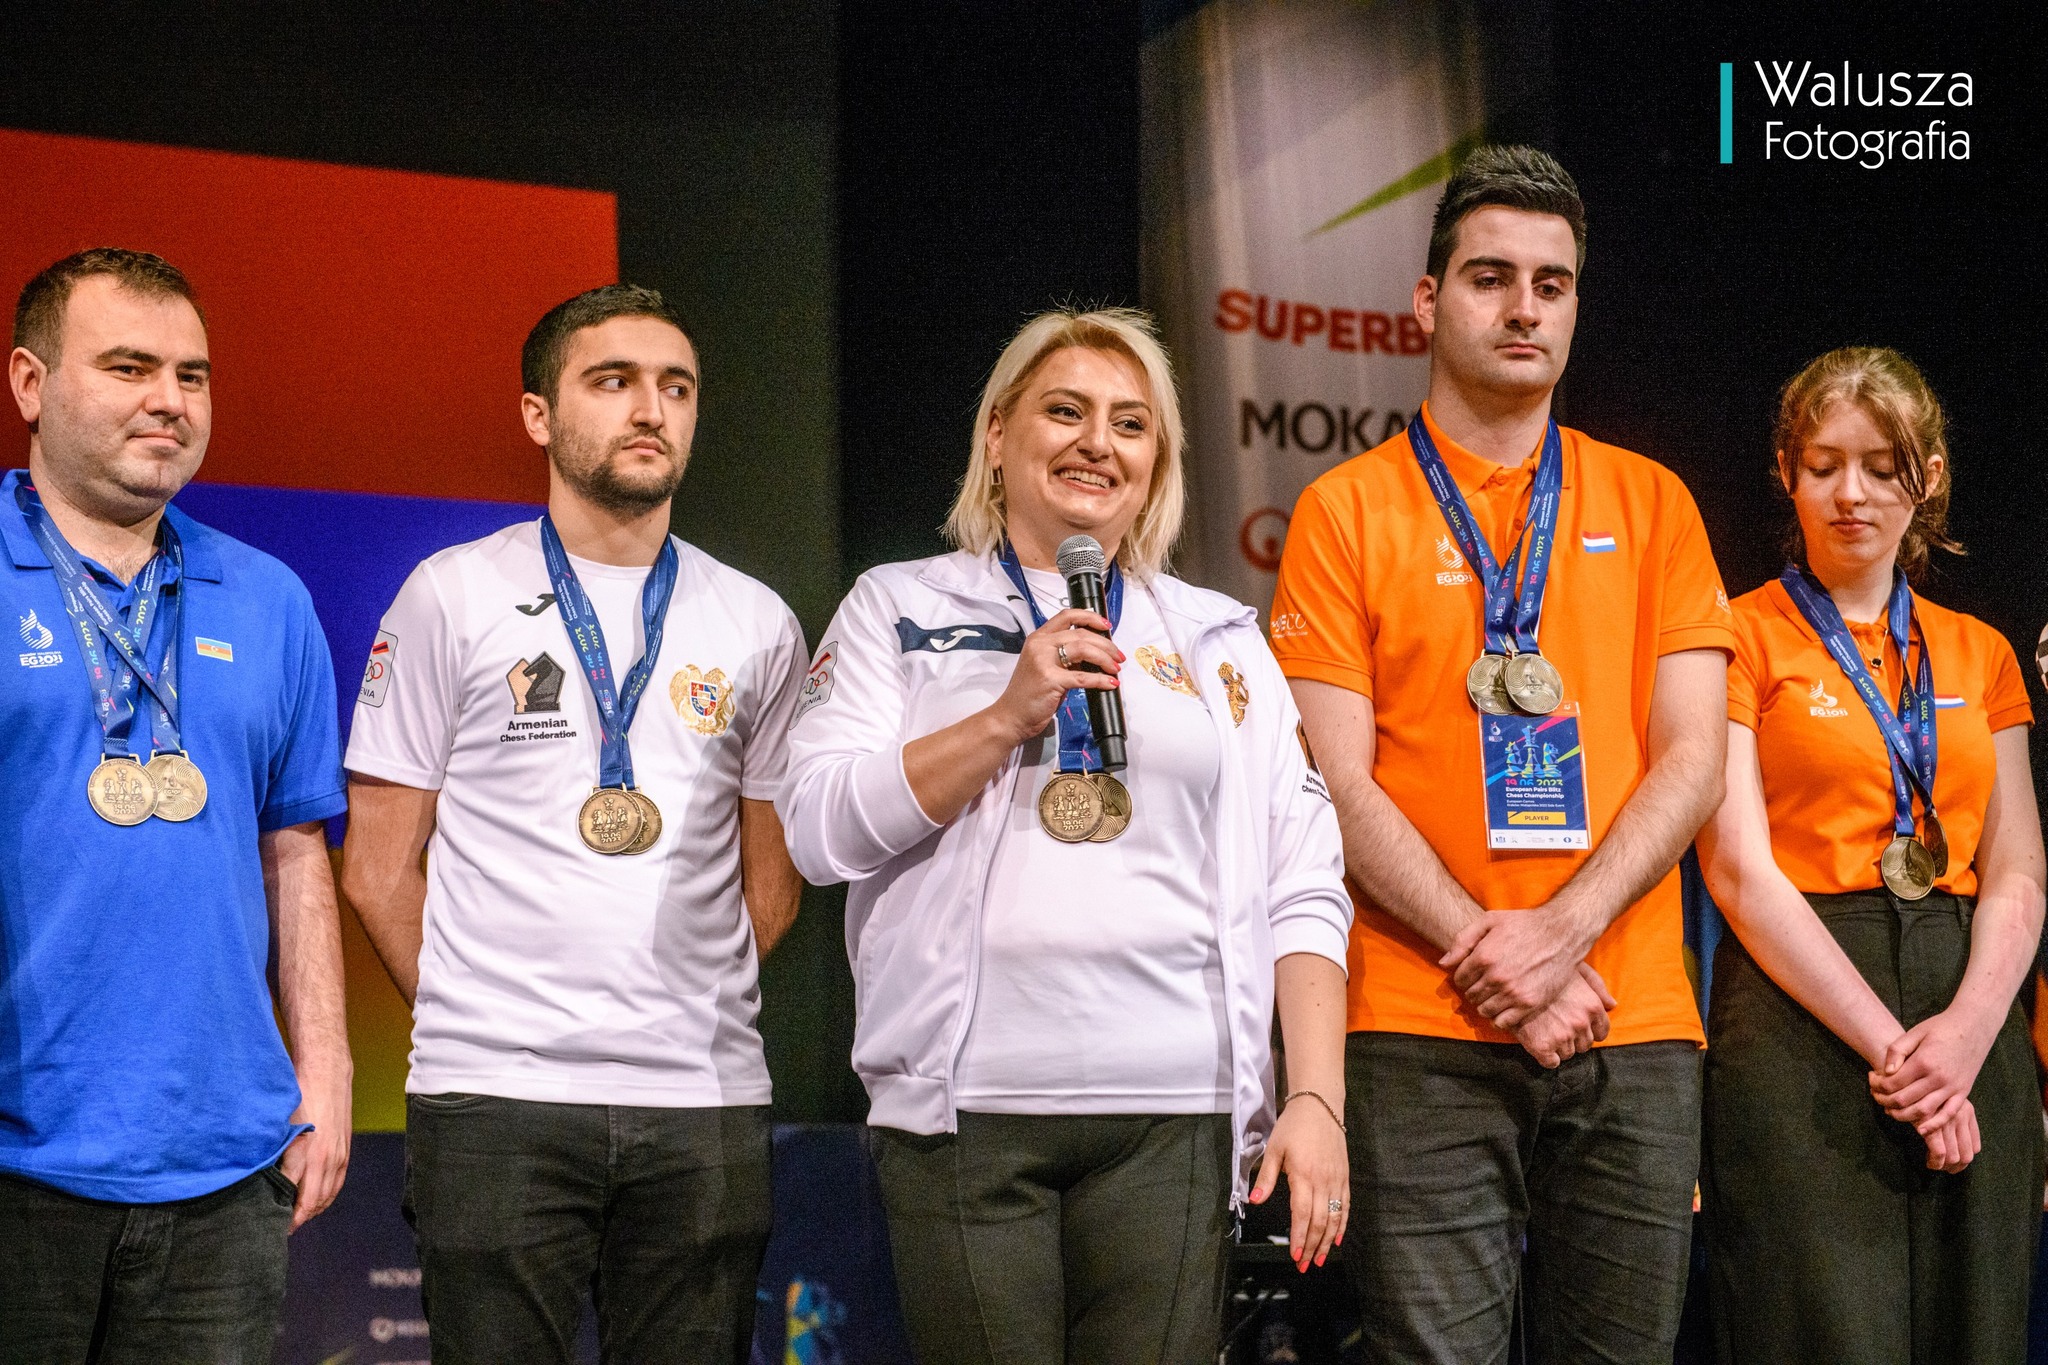 Armenia wins European Pair Blitz Chess Championship